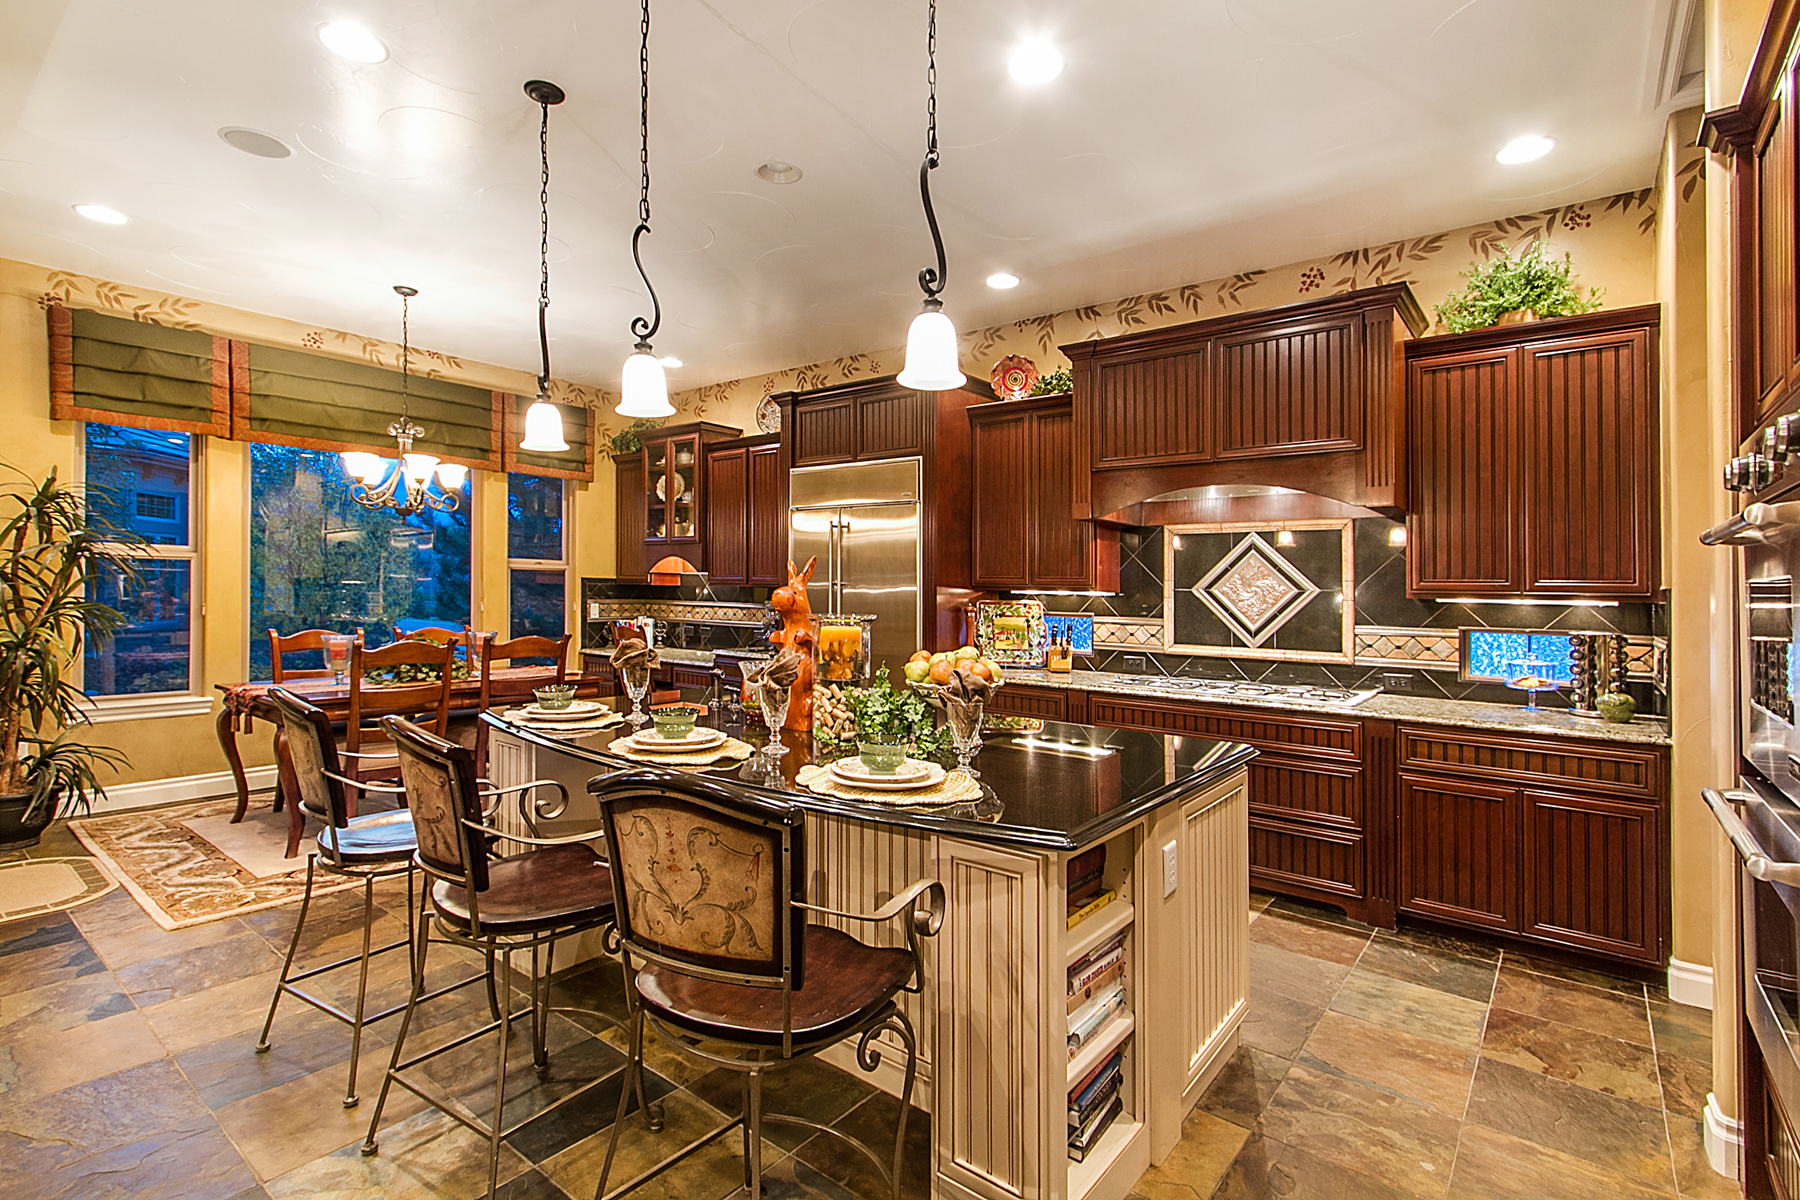 14 Amazing Kitchen Interior Design Ideas For Any Home - Interior Design ...